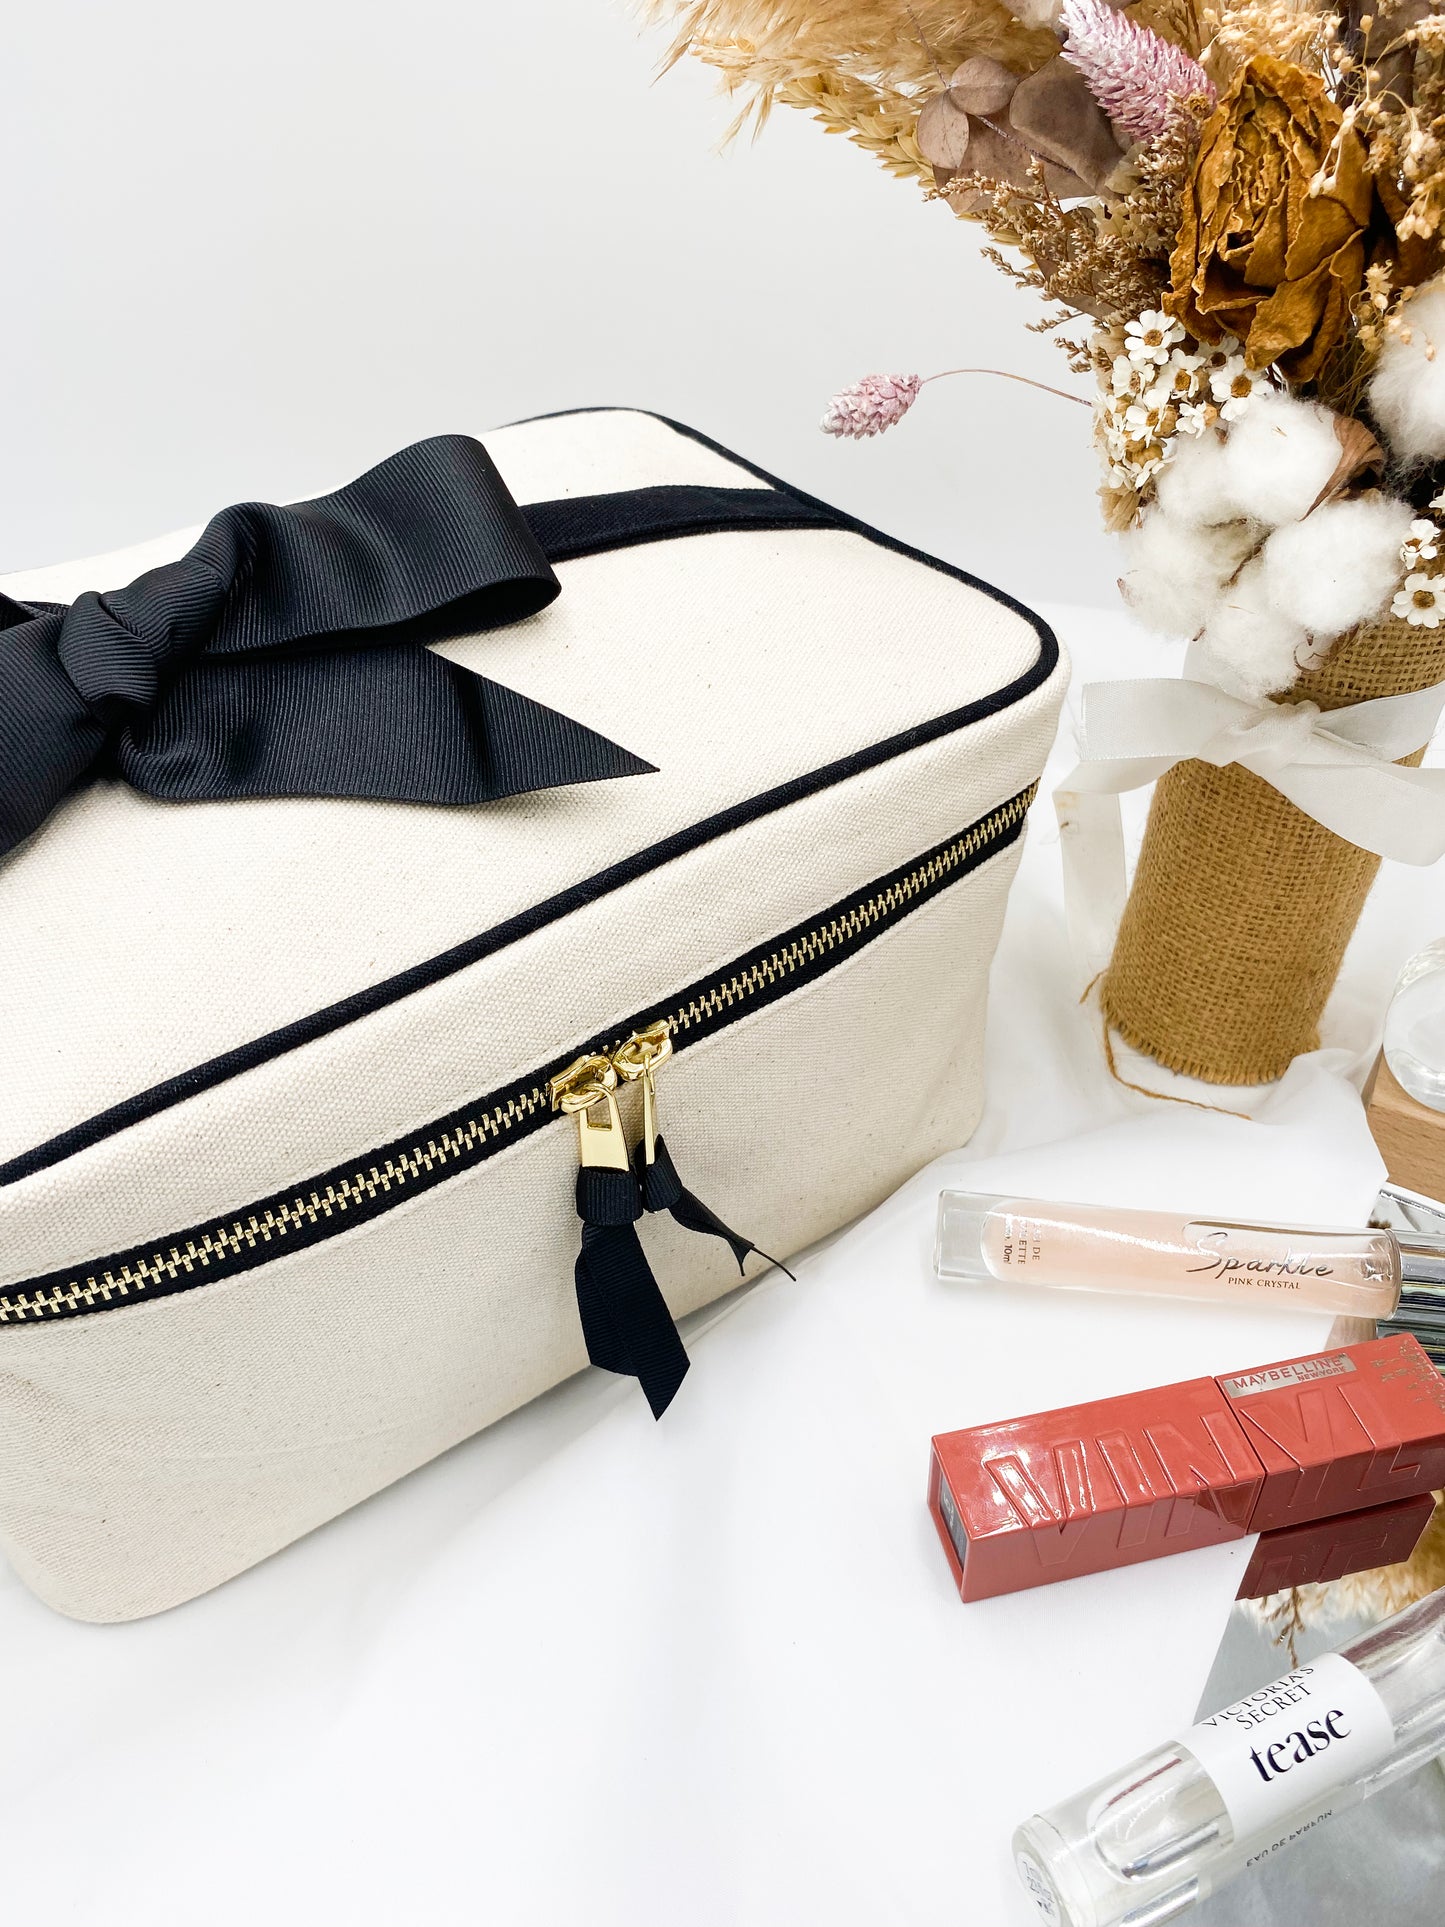 Popular Case for Travel/Home/Makeup organizing - Customizable, Laminated Lining, Medium size, Cream - Bag-all Europe